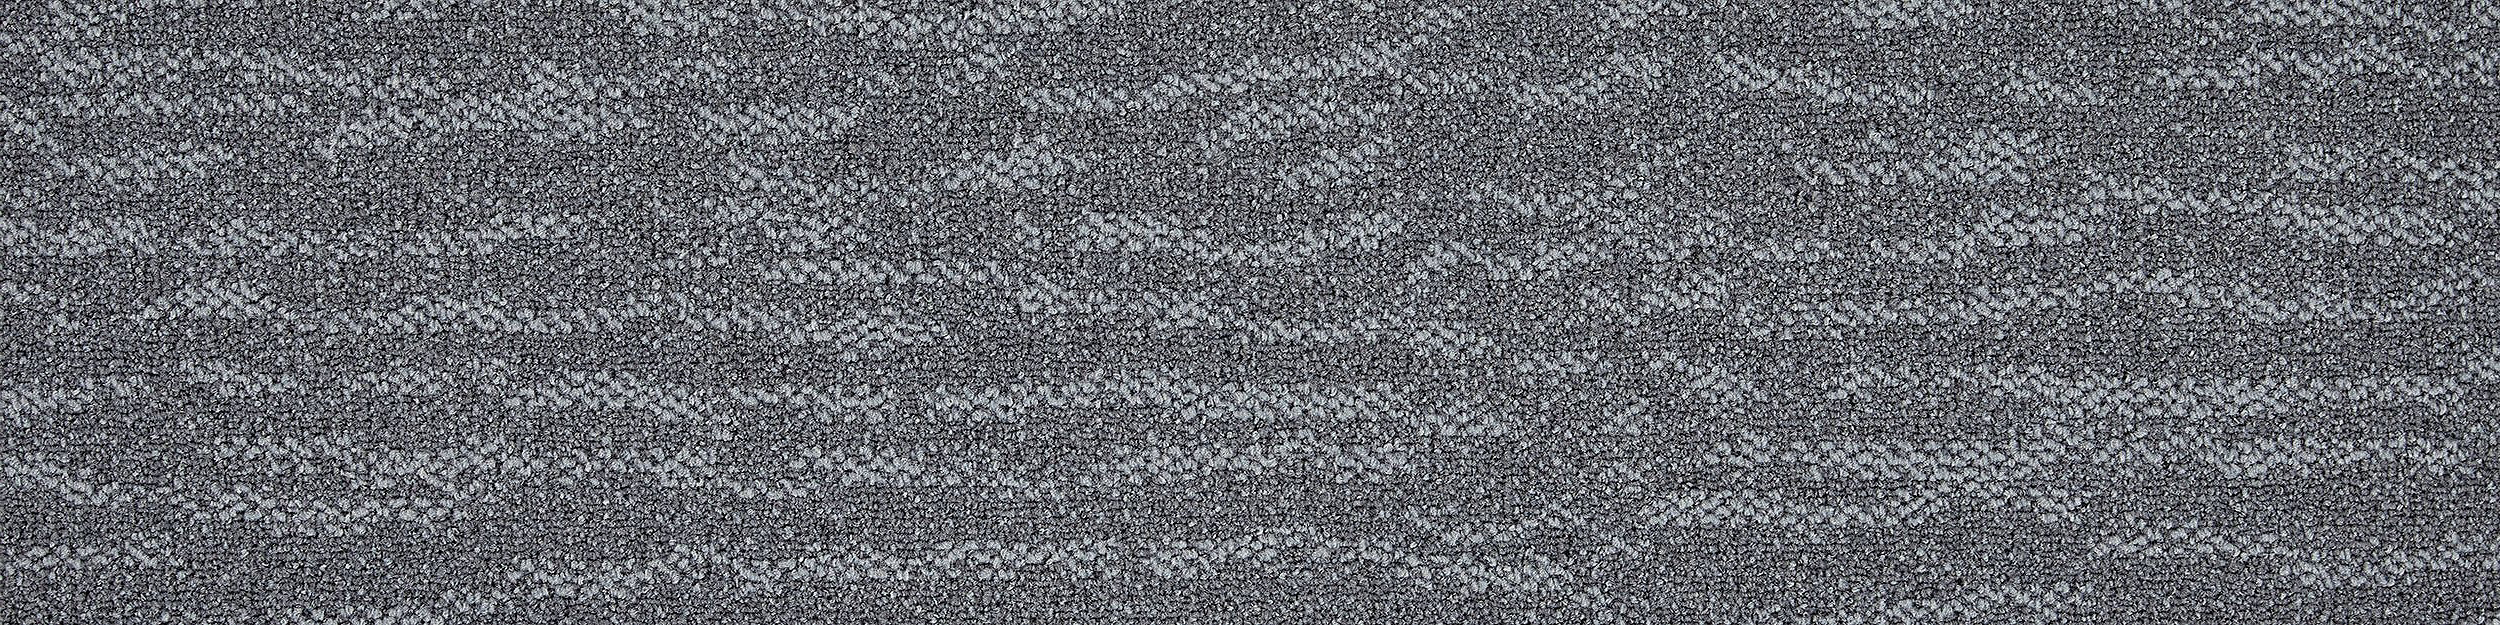 Works Fluid Carpet Tile In Concrete afbeeldingnummer 8